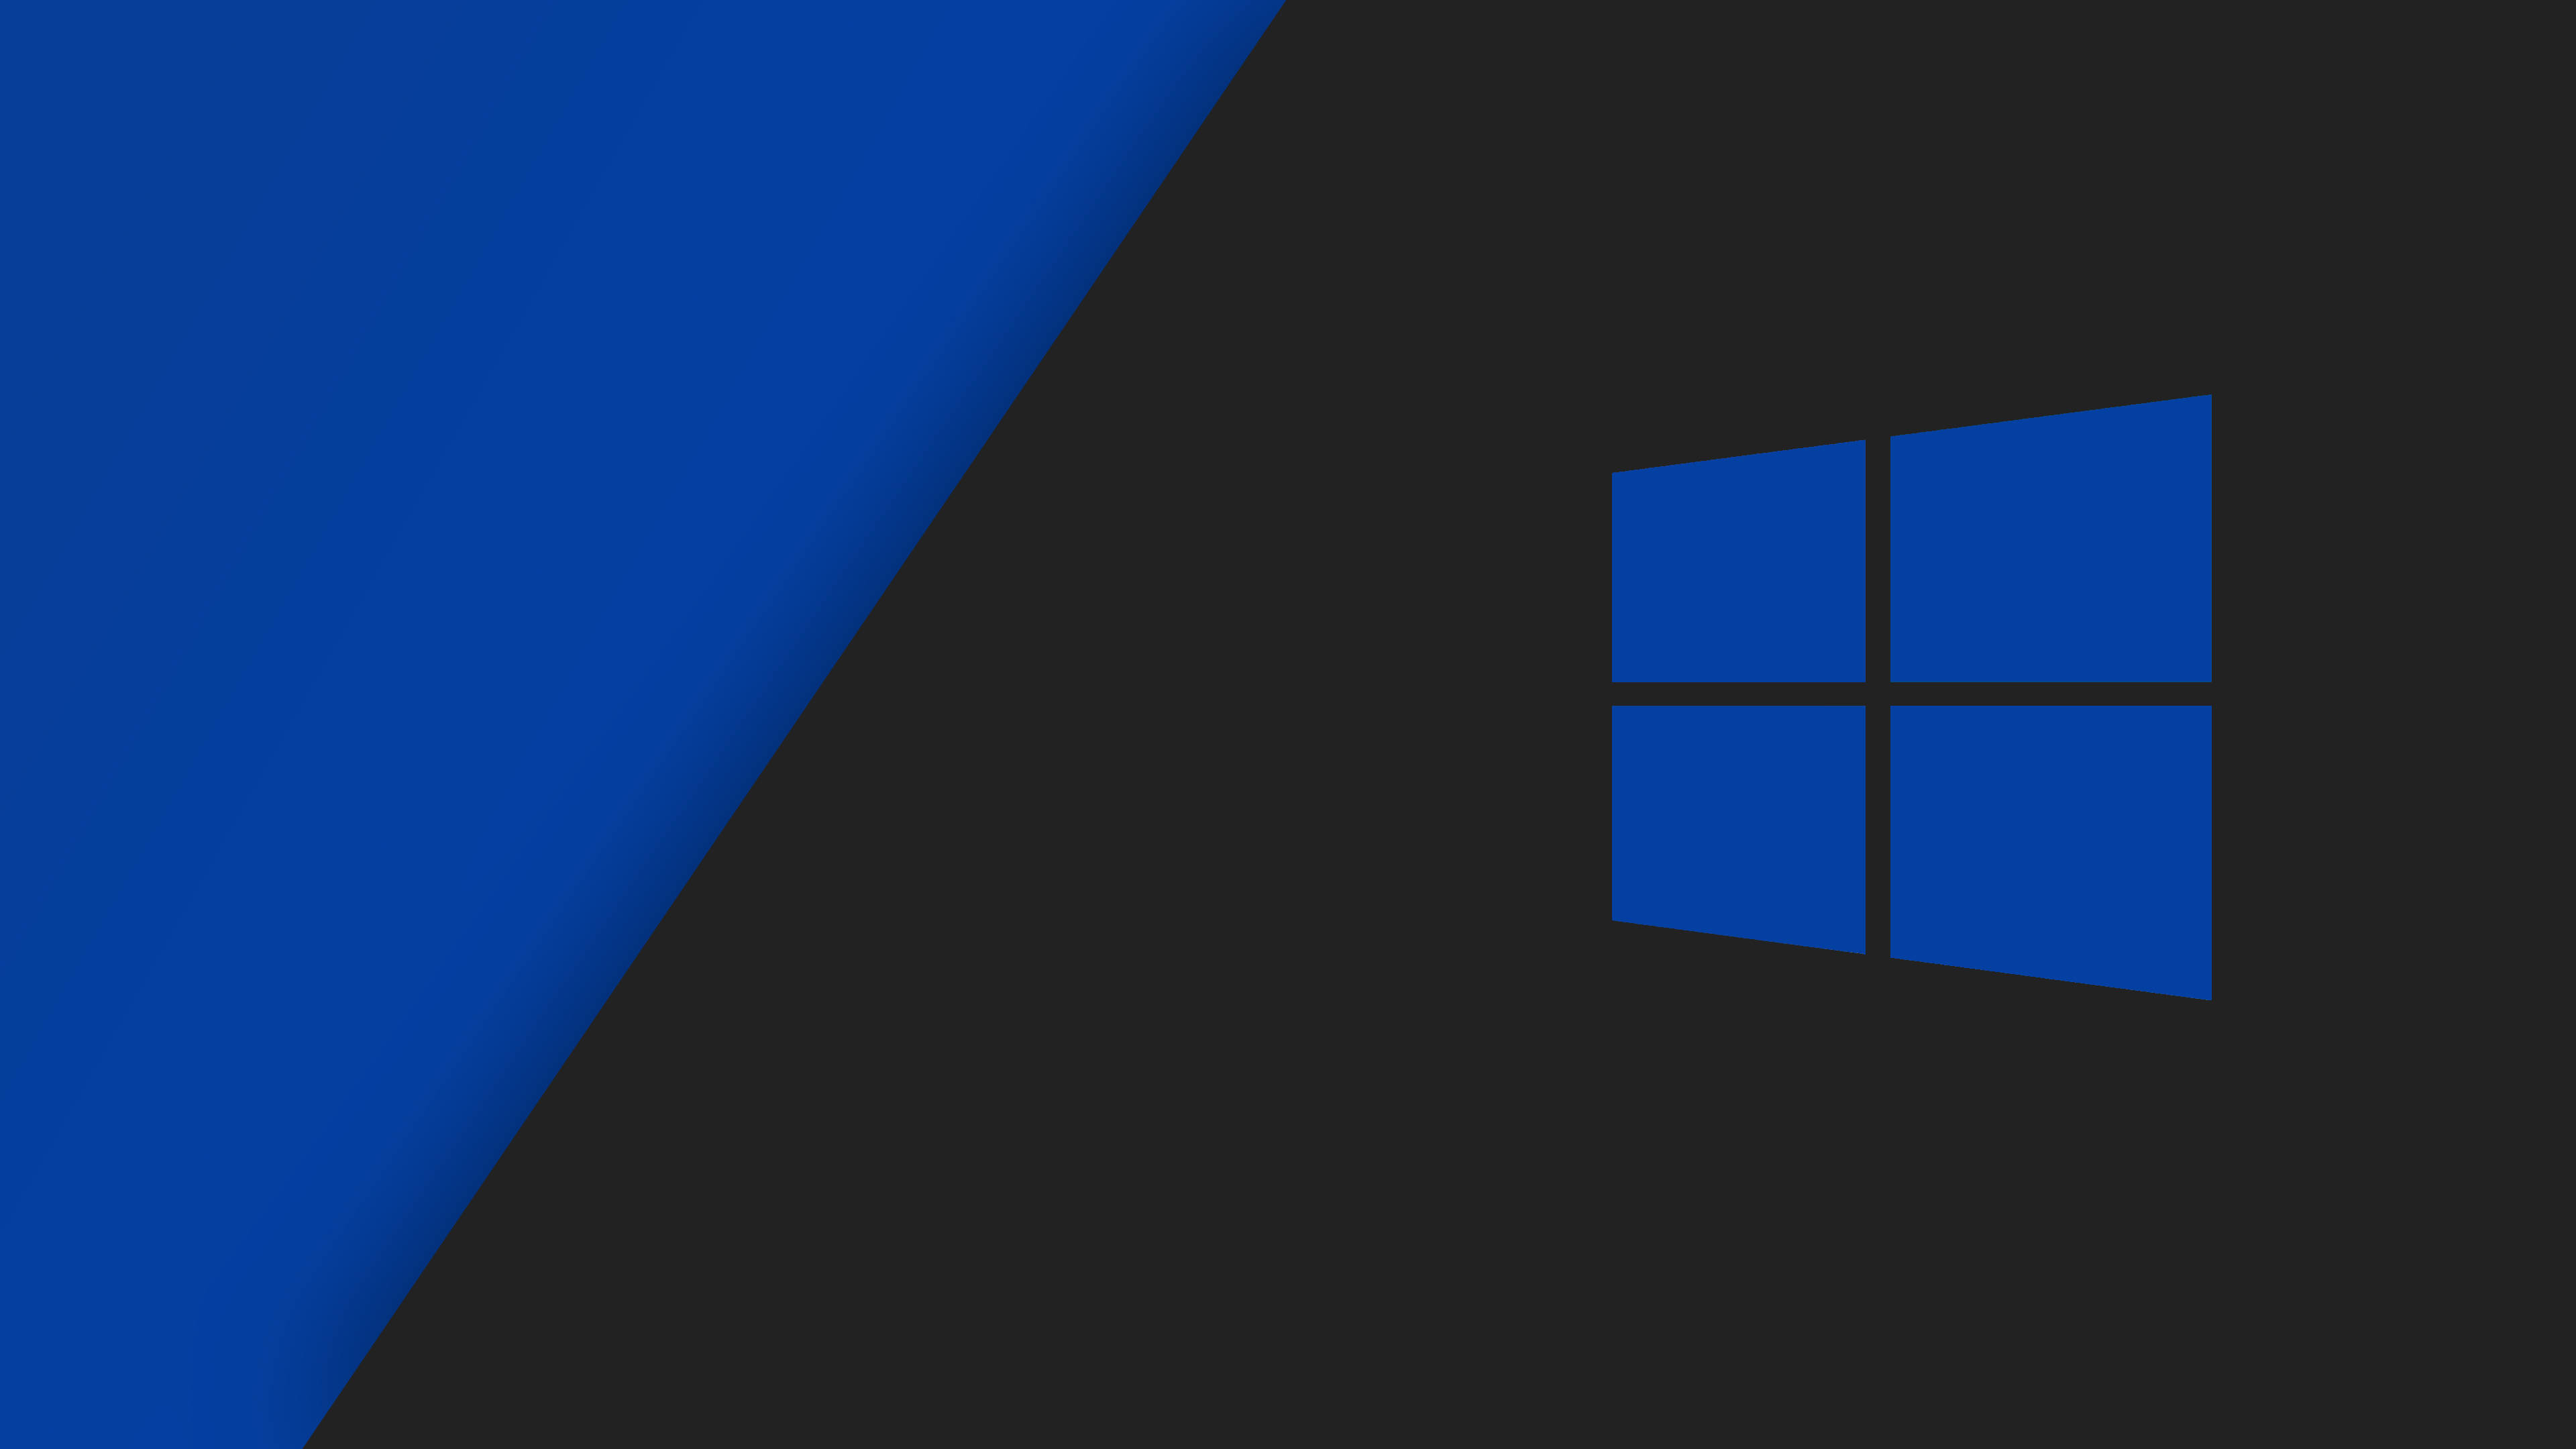 Download Blue And Black Windows 10 Logo Wallpaper